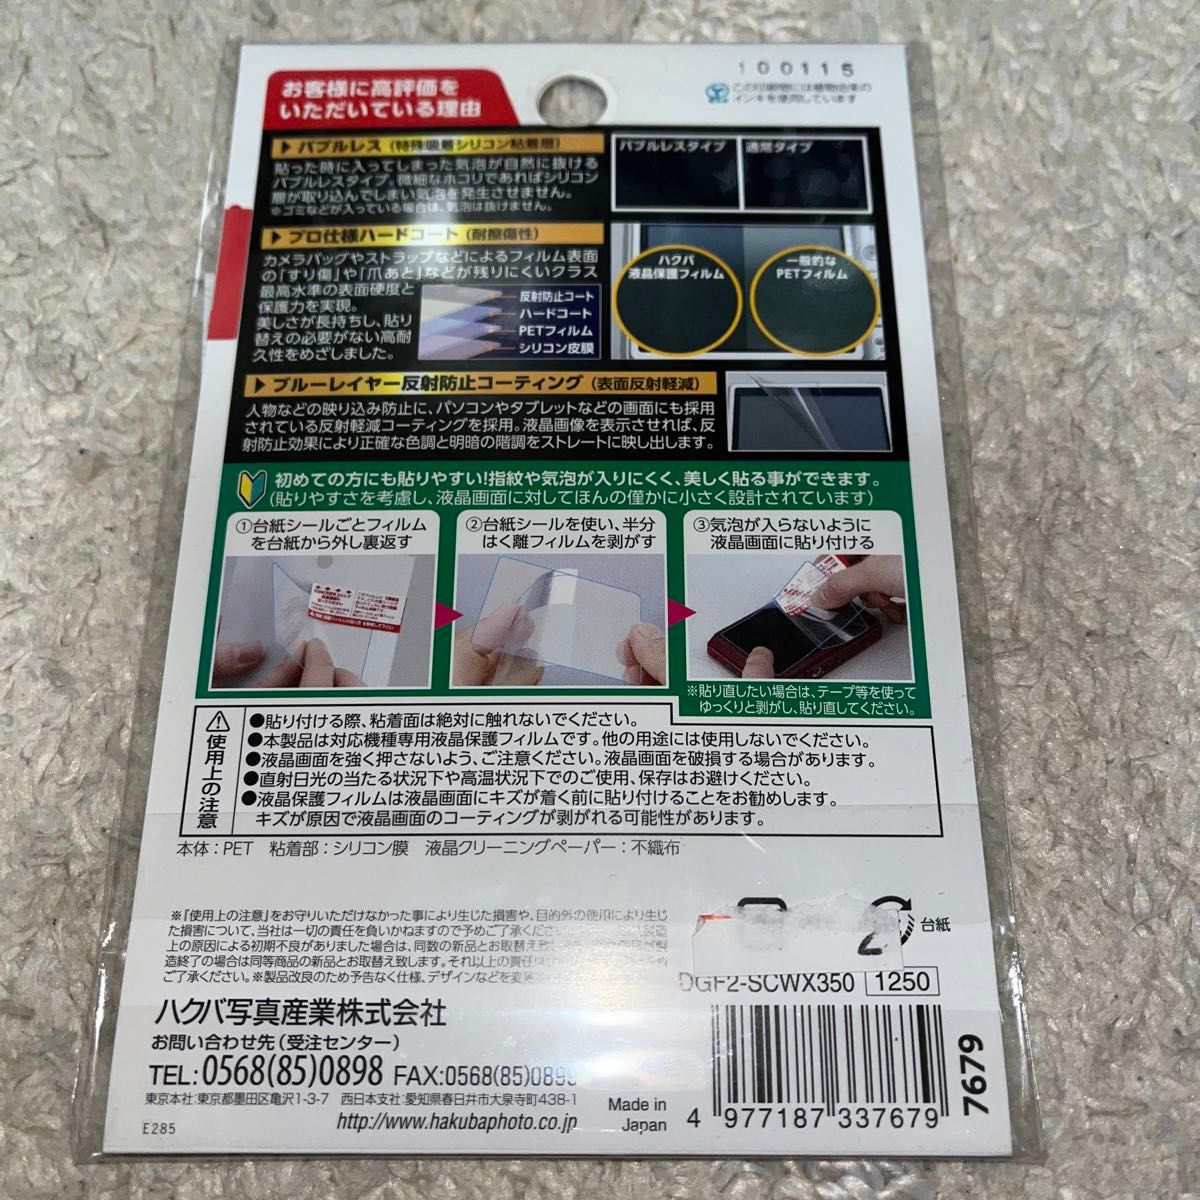 HAKUBA 液晶保護フィルム MarkII SONY Cyber-shot DSC-WX350用 気泡レス低反射 DGF2-SC